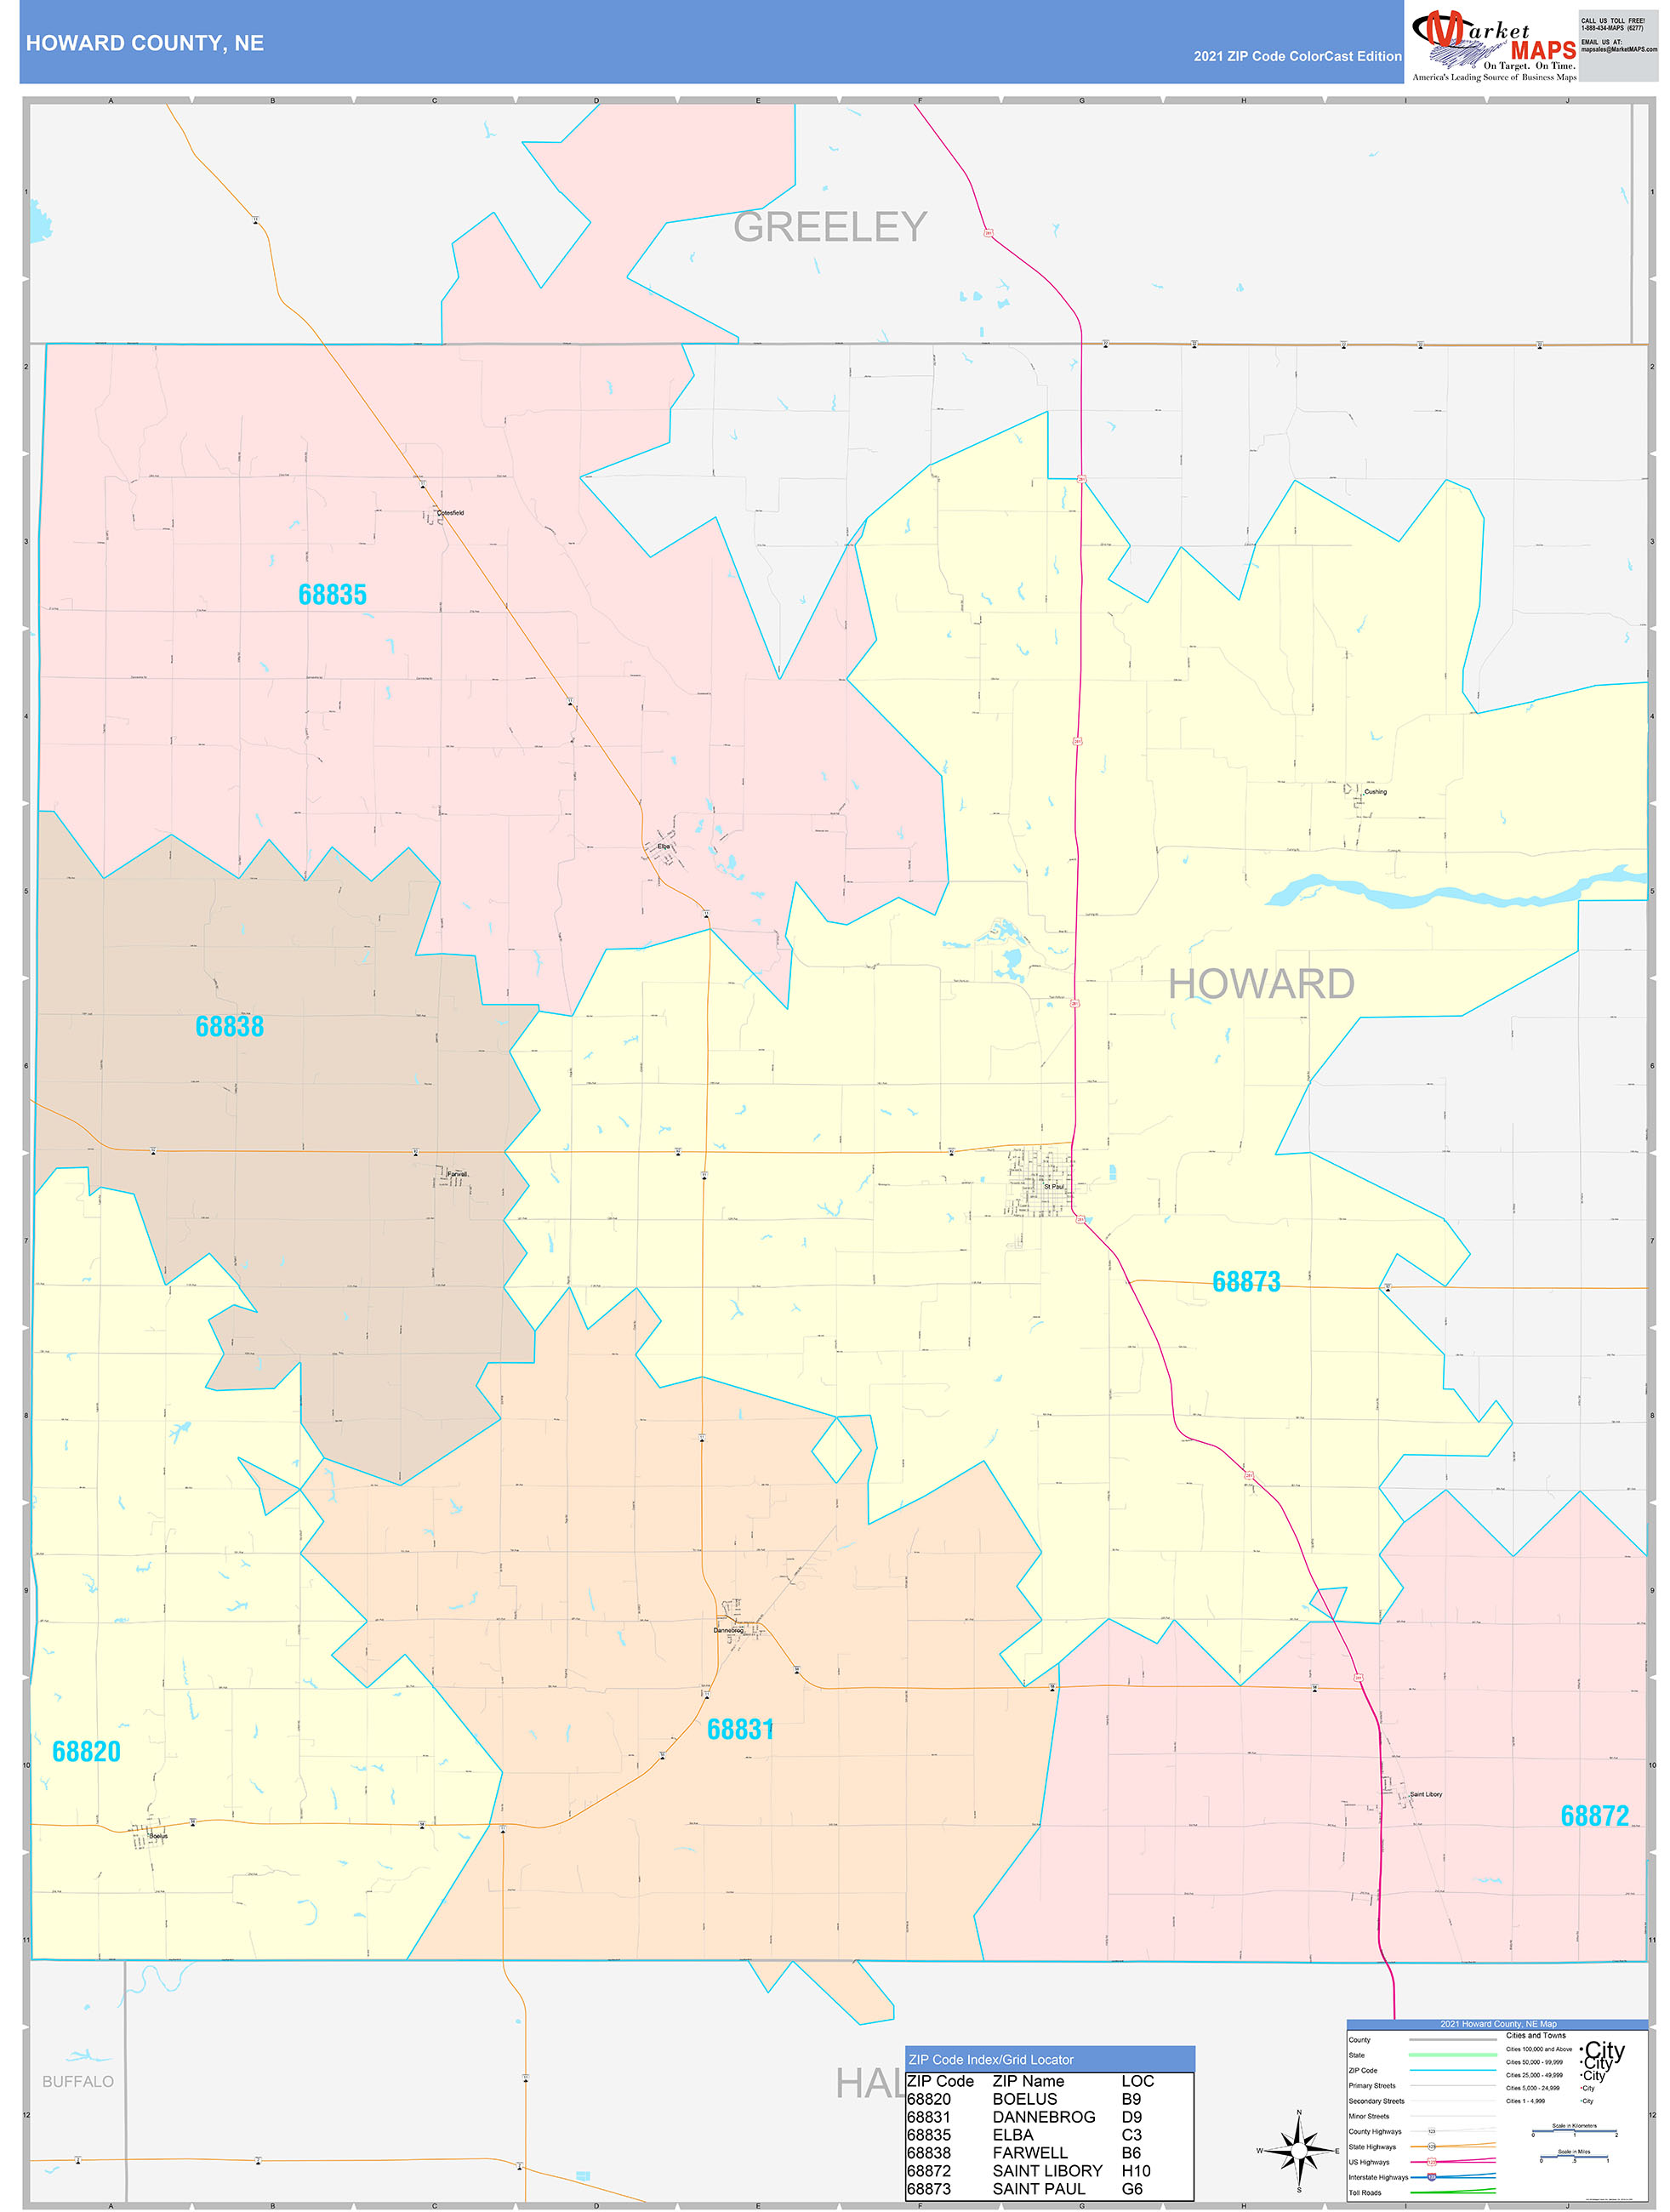 Howard County, NE Wall Map Color Cast Style by MarketMAPS